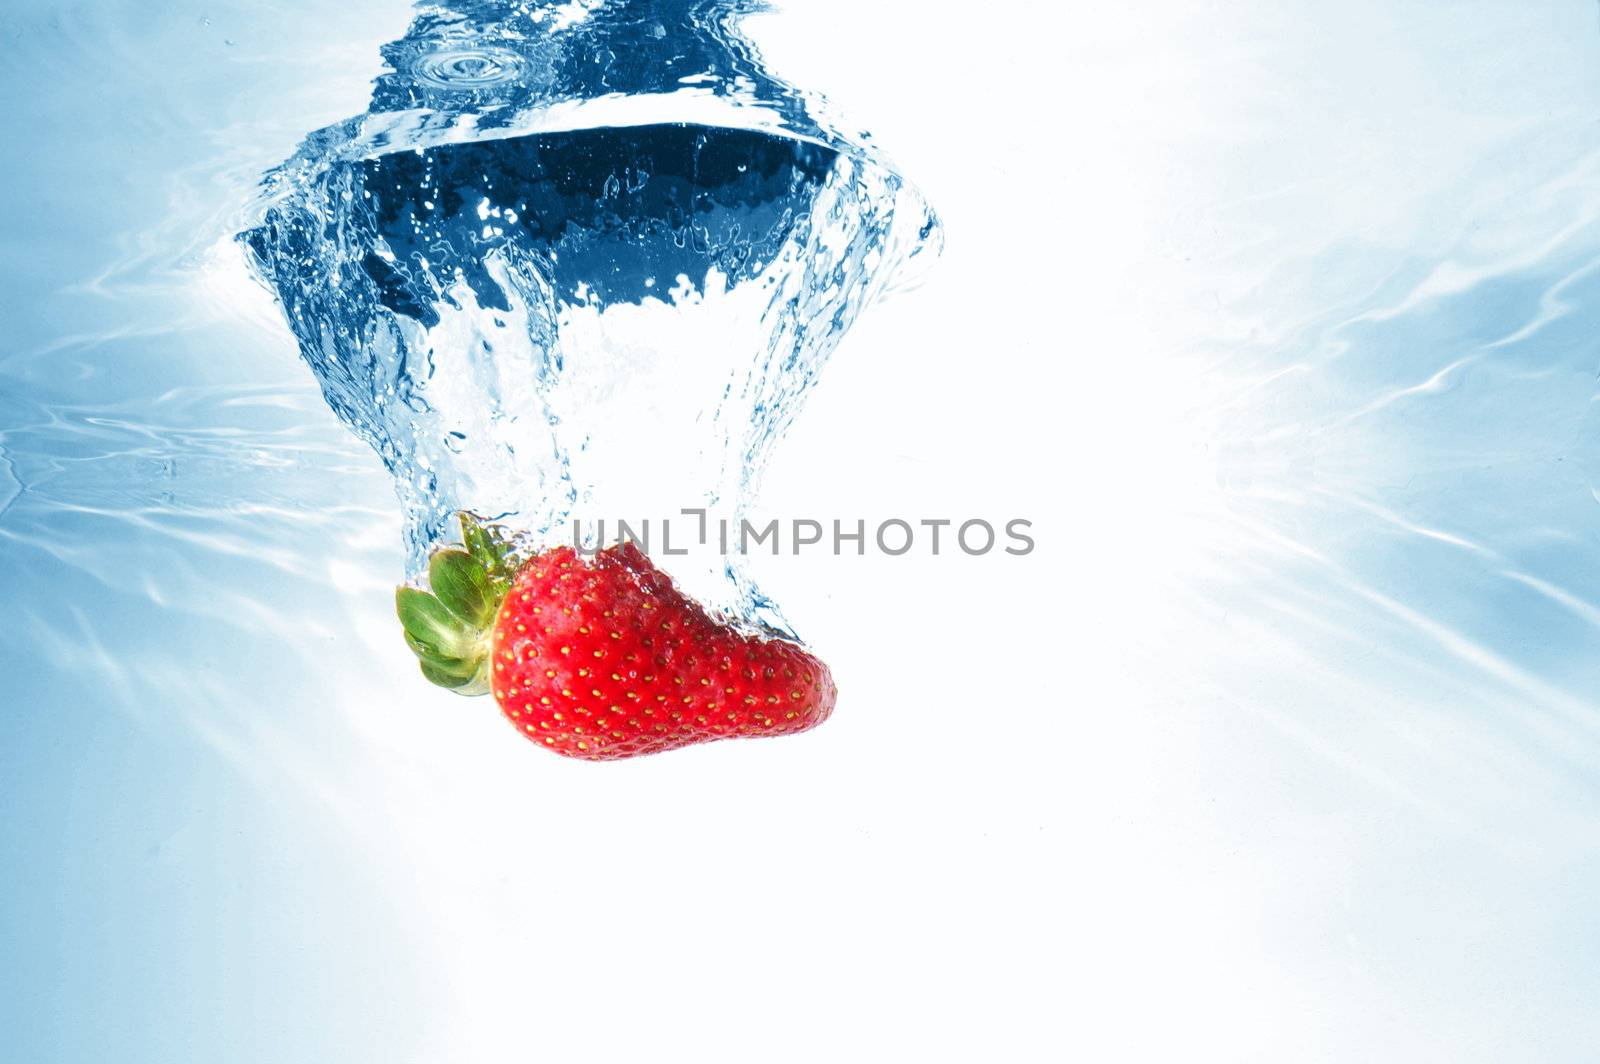 strawberry splash in warter showing healthy lifestyle